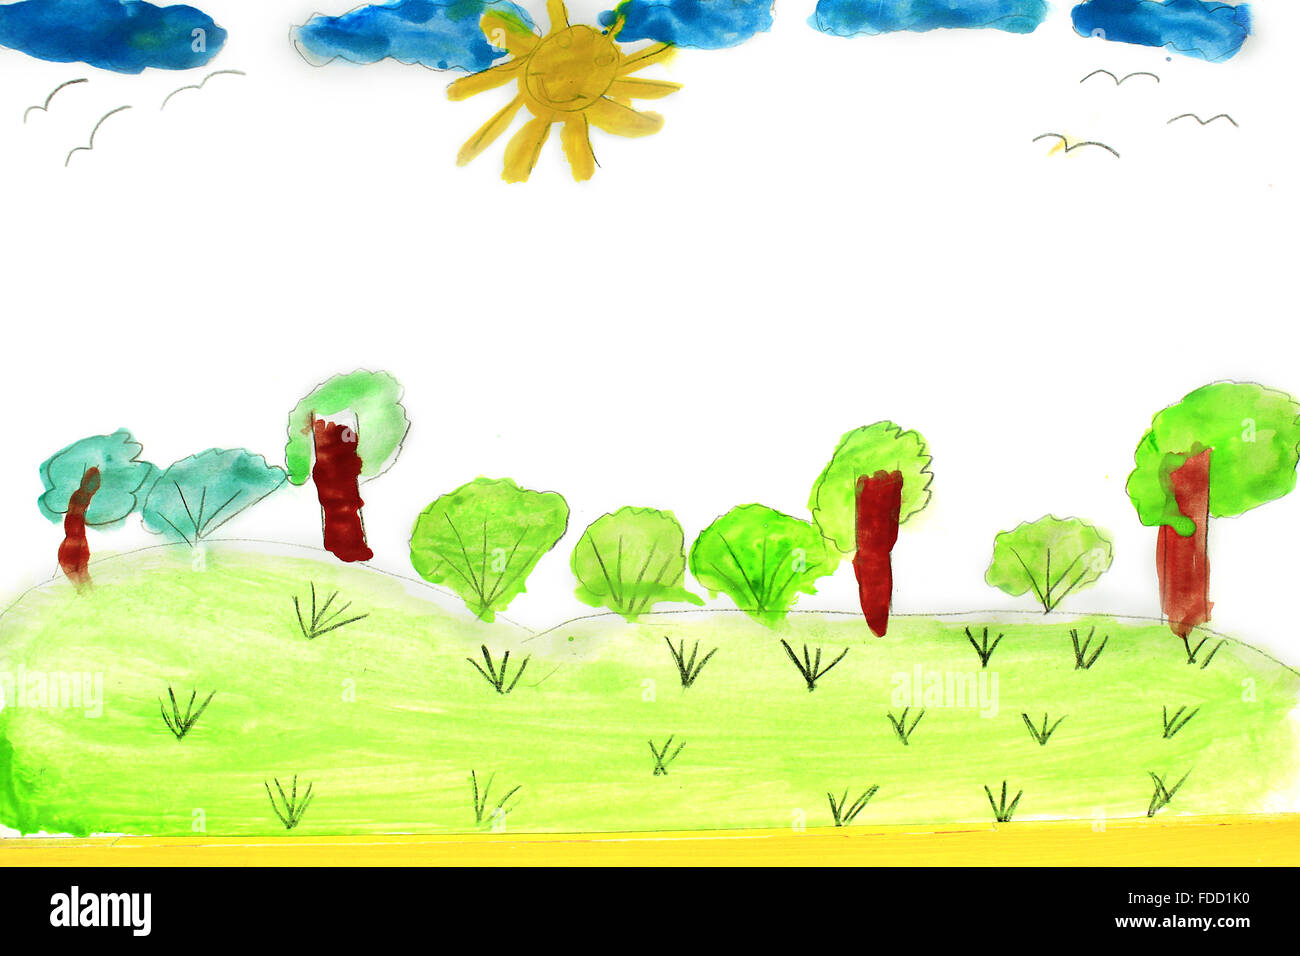 https://c8.alamy.com/comp/FDD1K0/joy-childish-drawing-of-summer-with-trees-and-bush-FDD1K0.jpg